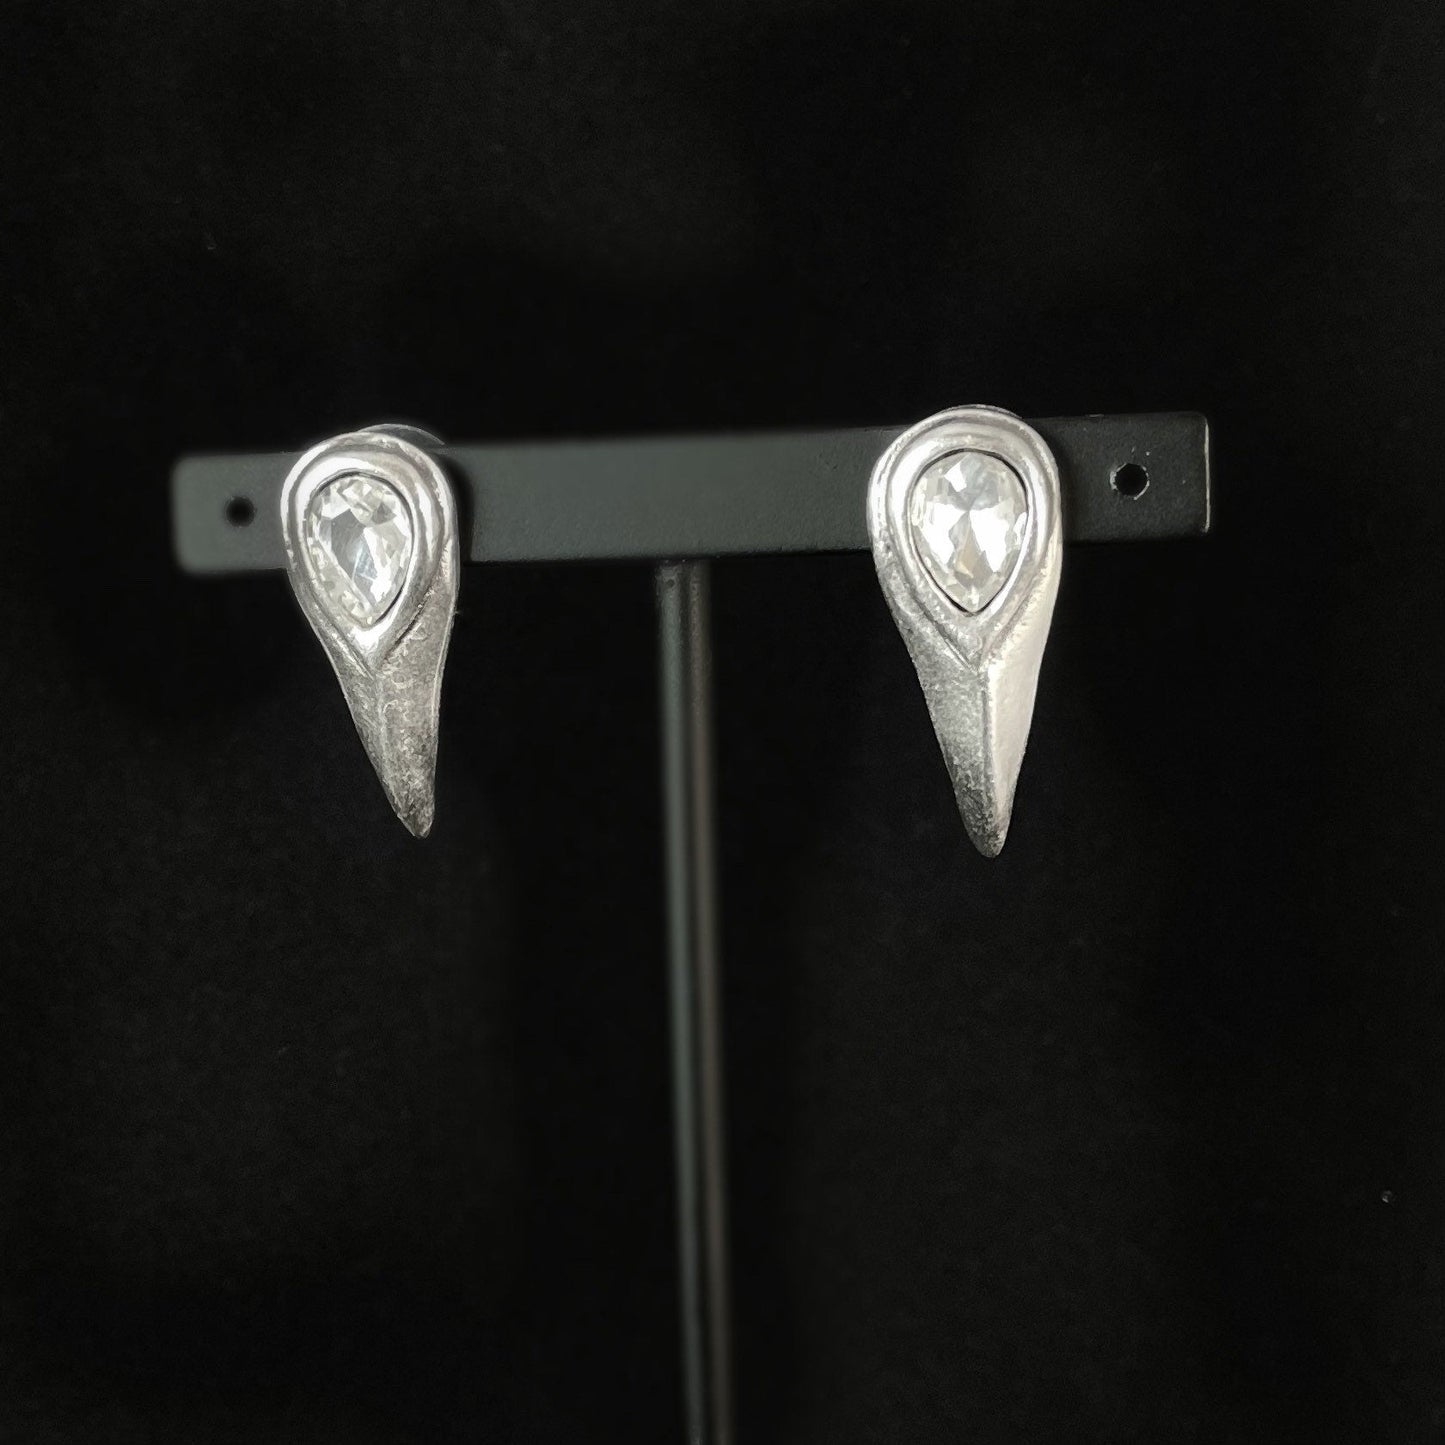 Handmade Silver Earrings with Crystals, Nickel Free